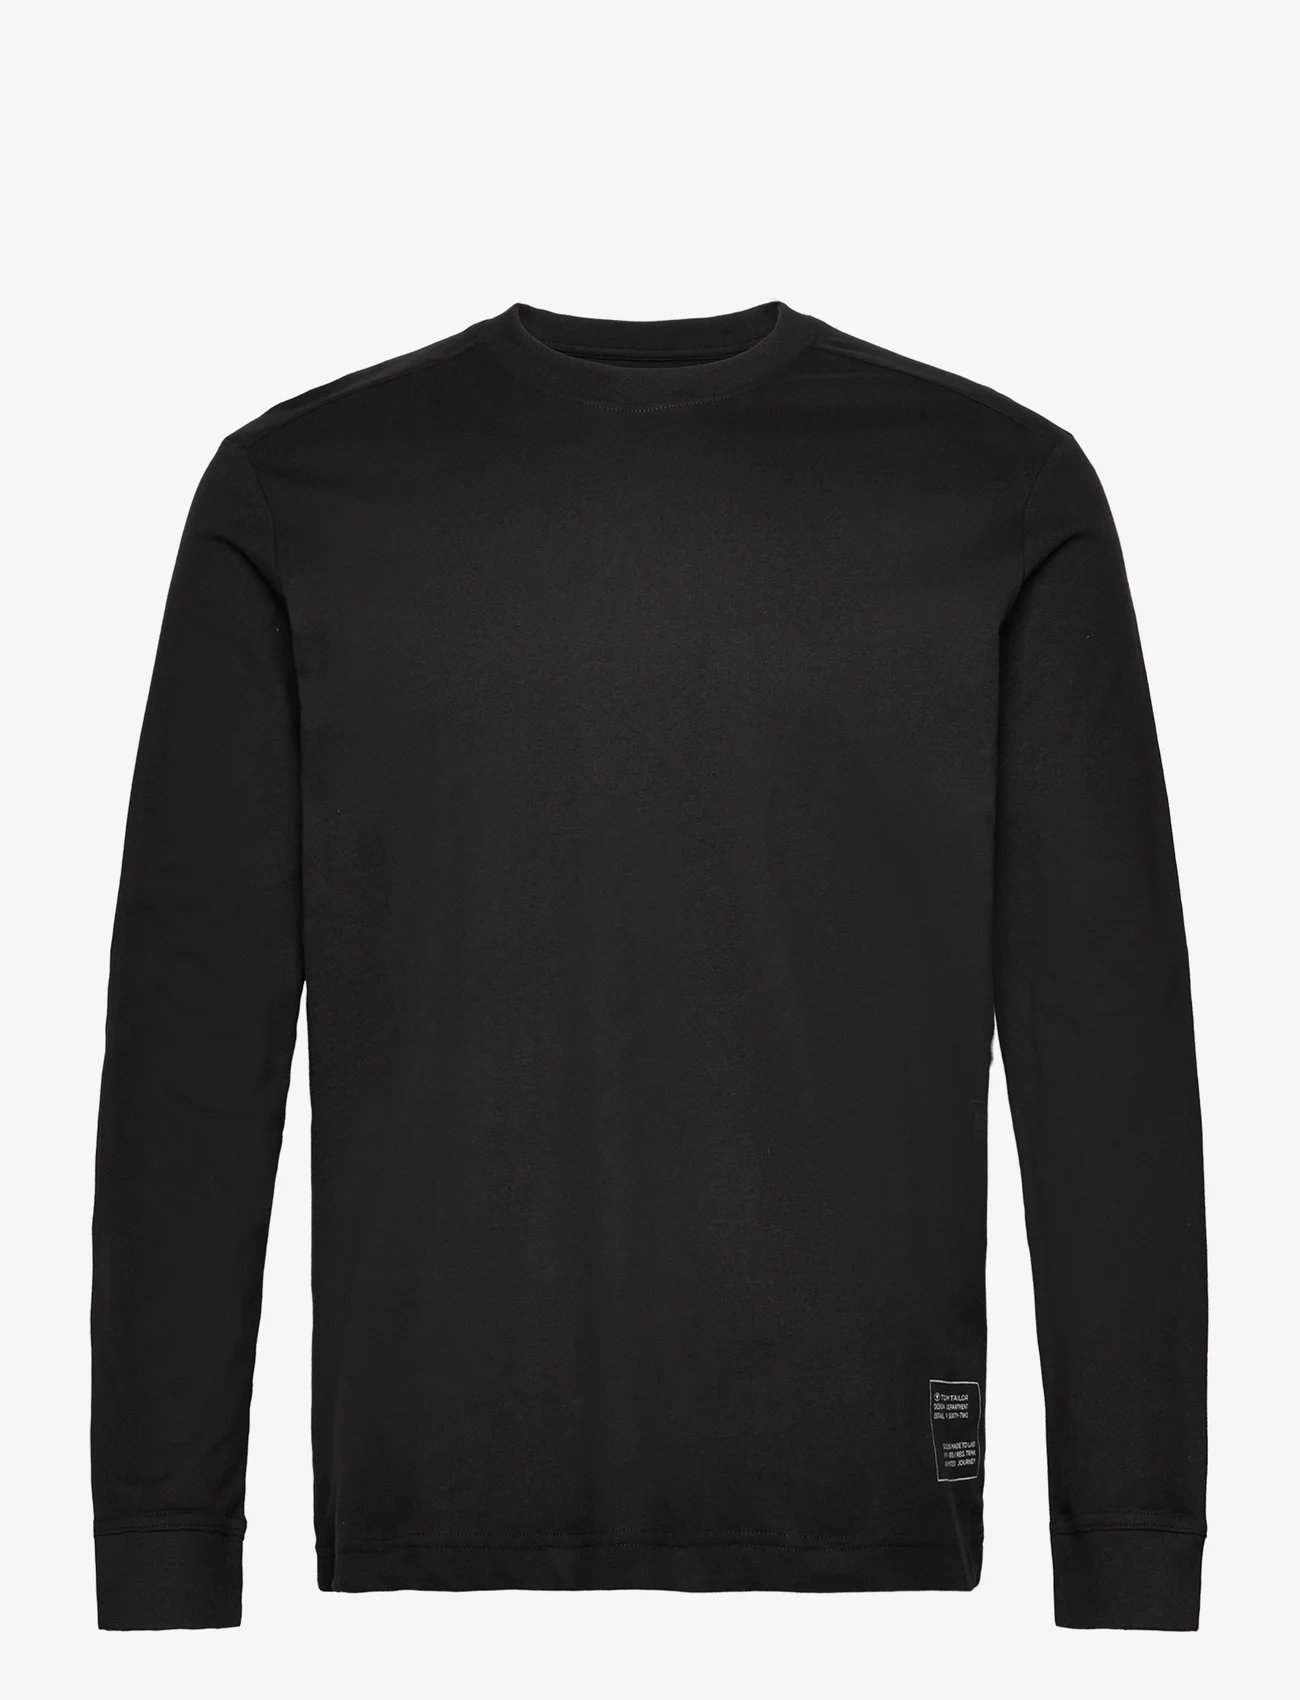 Tom Tailor - basic longsleeve t-shirt - lägsta priserna - black - 0